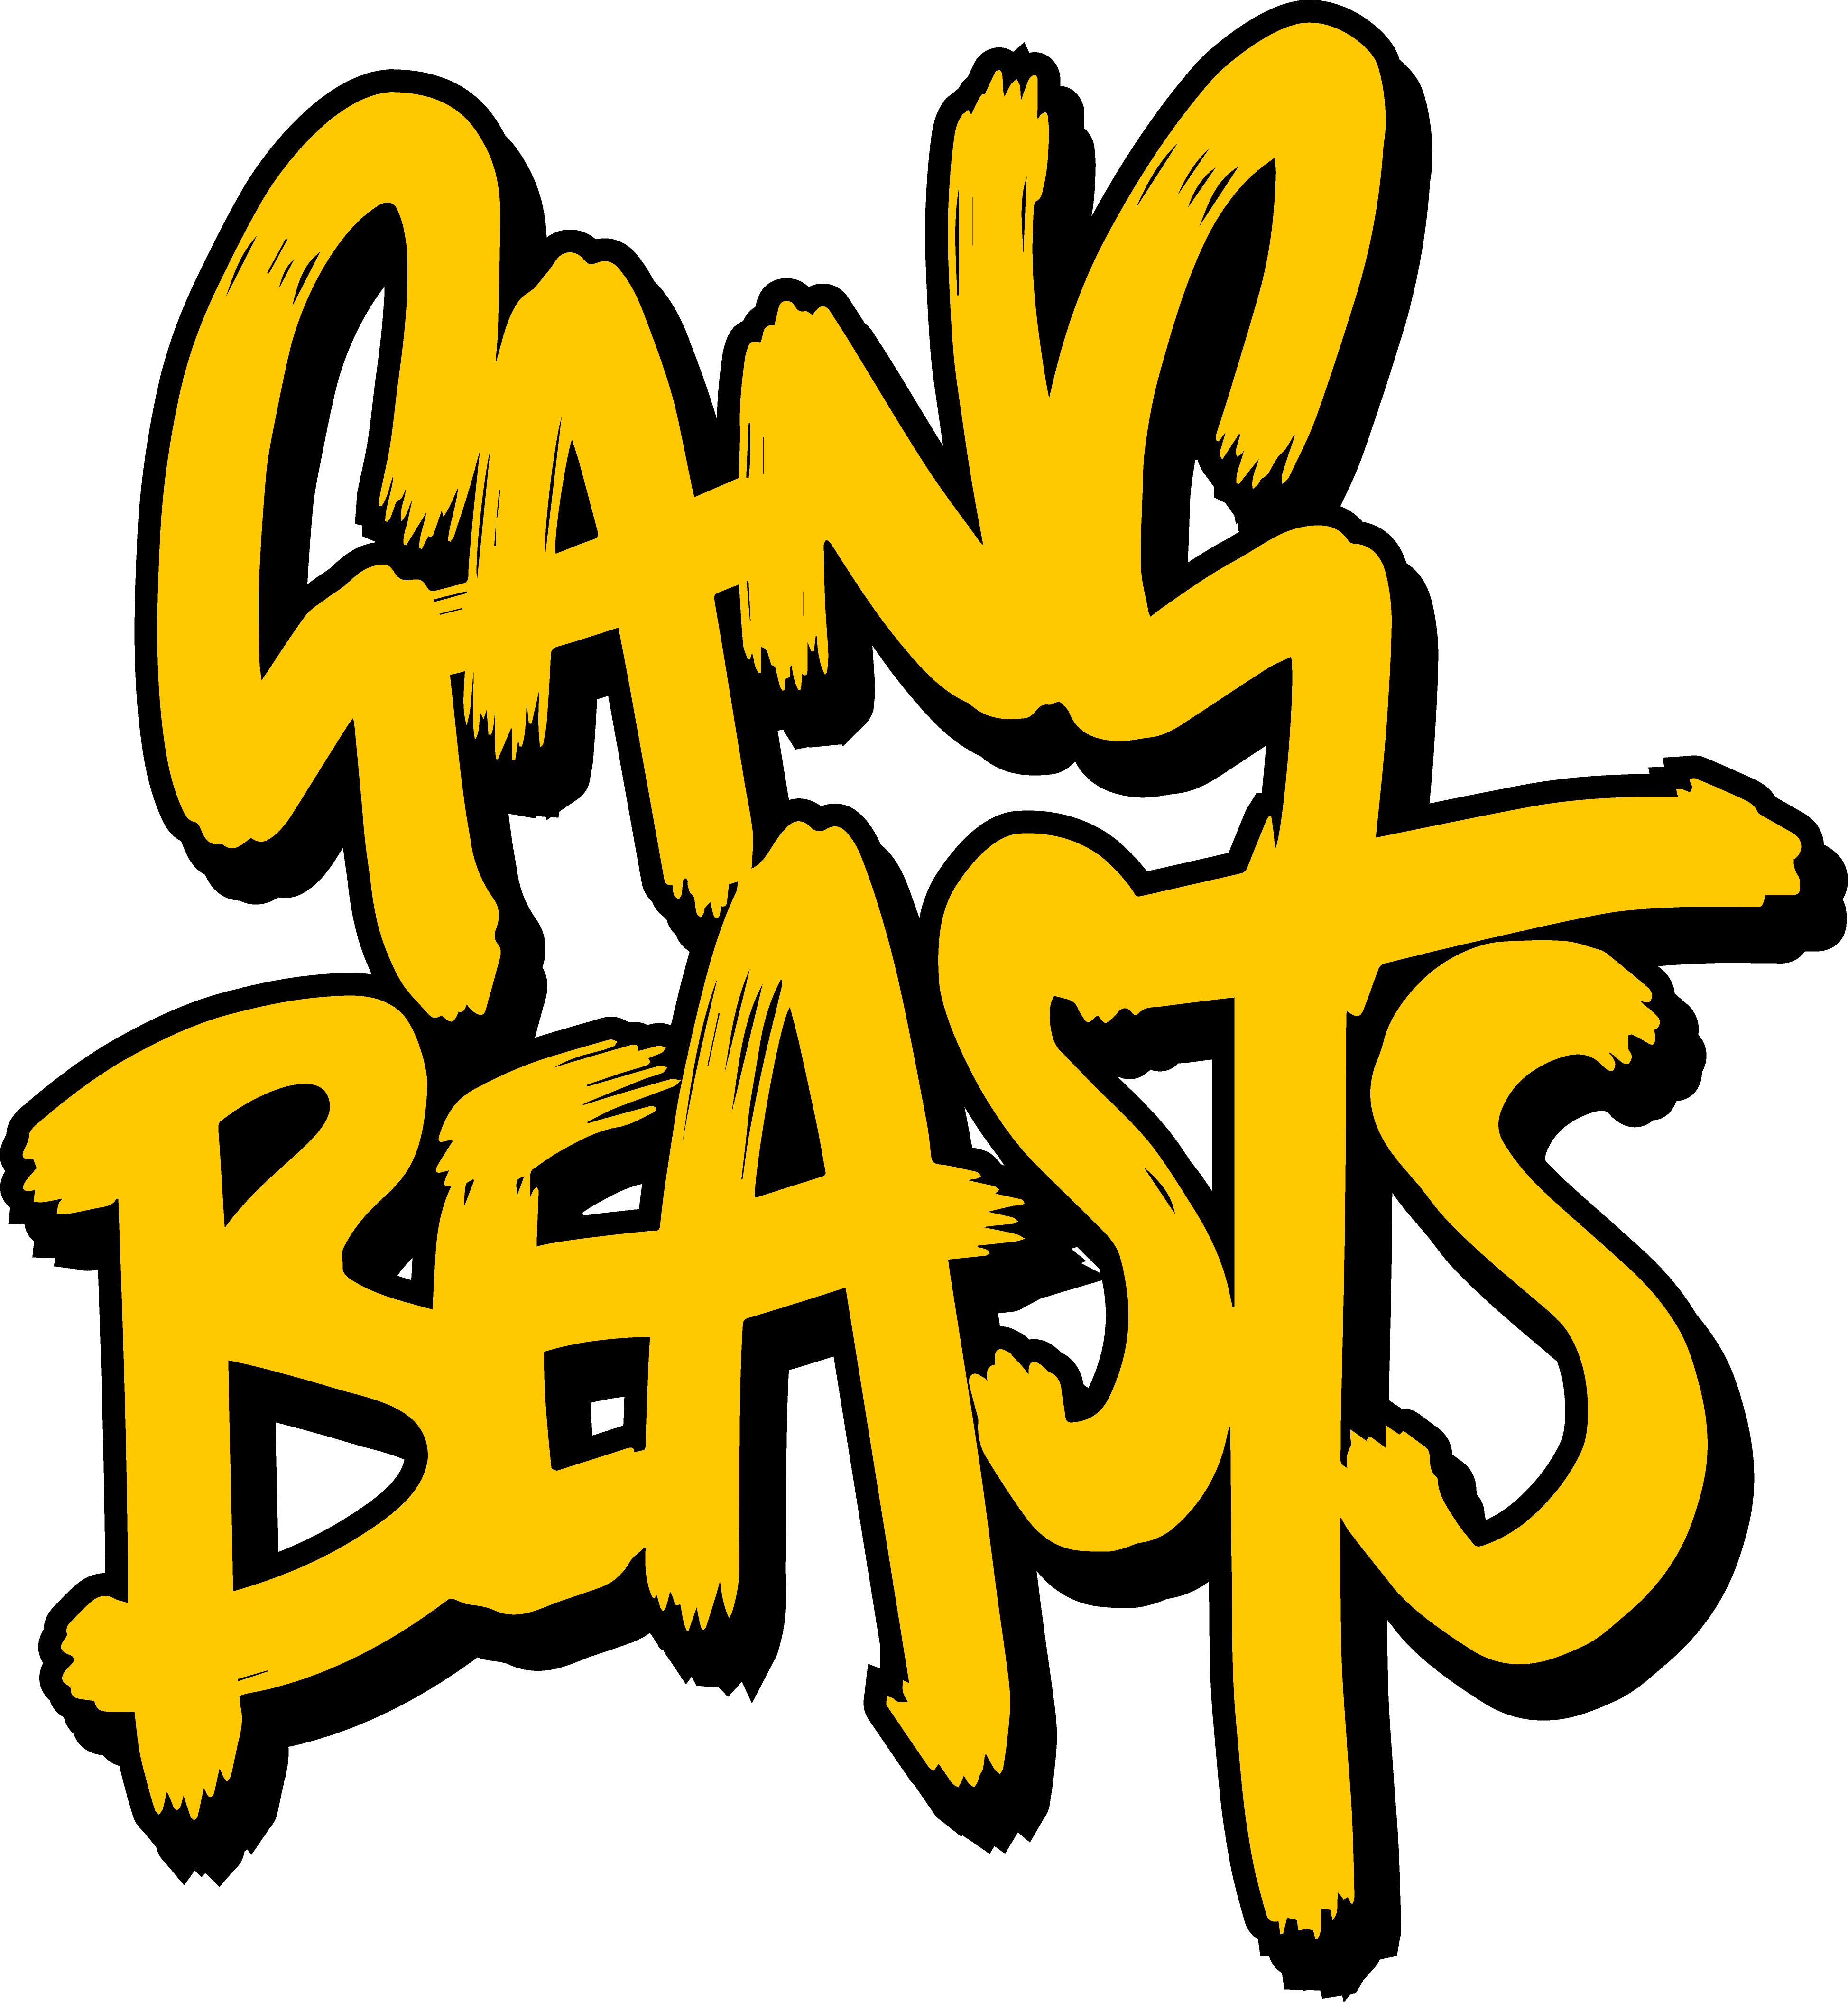 gang beasts 0.1.5 download